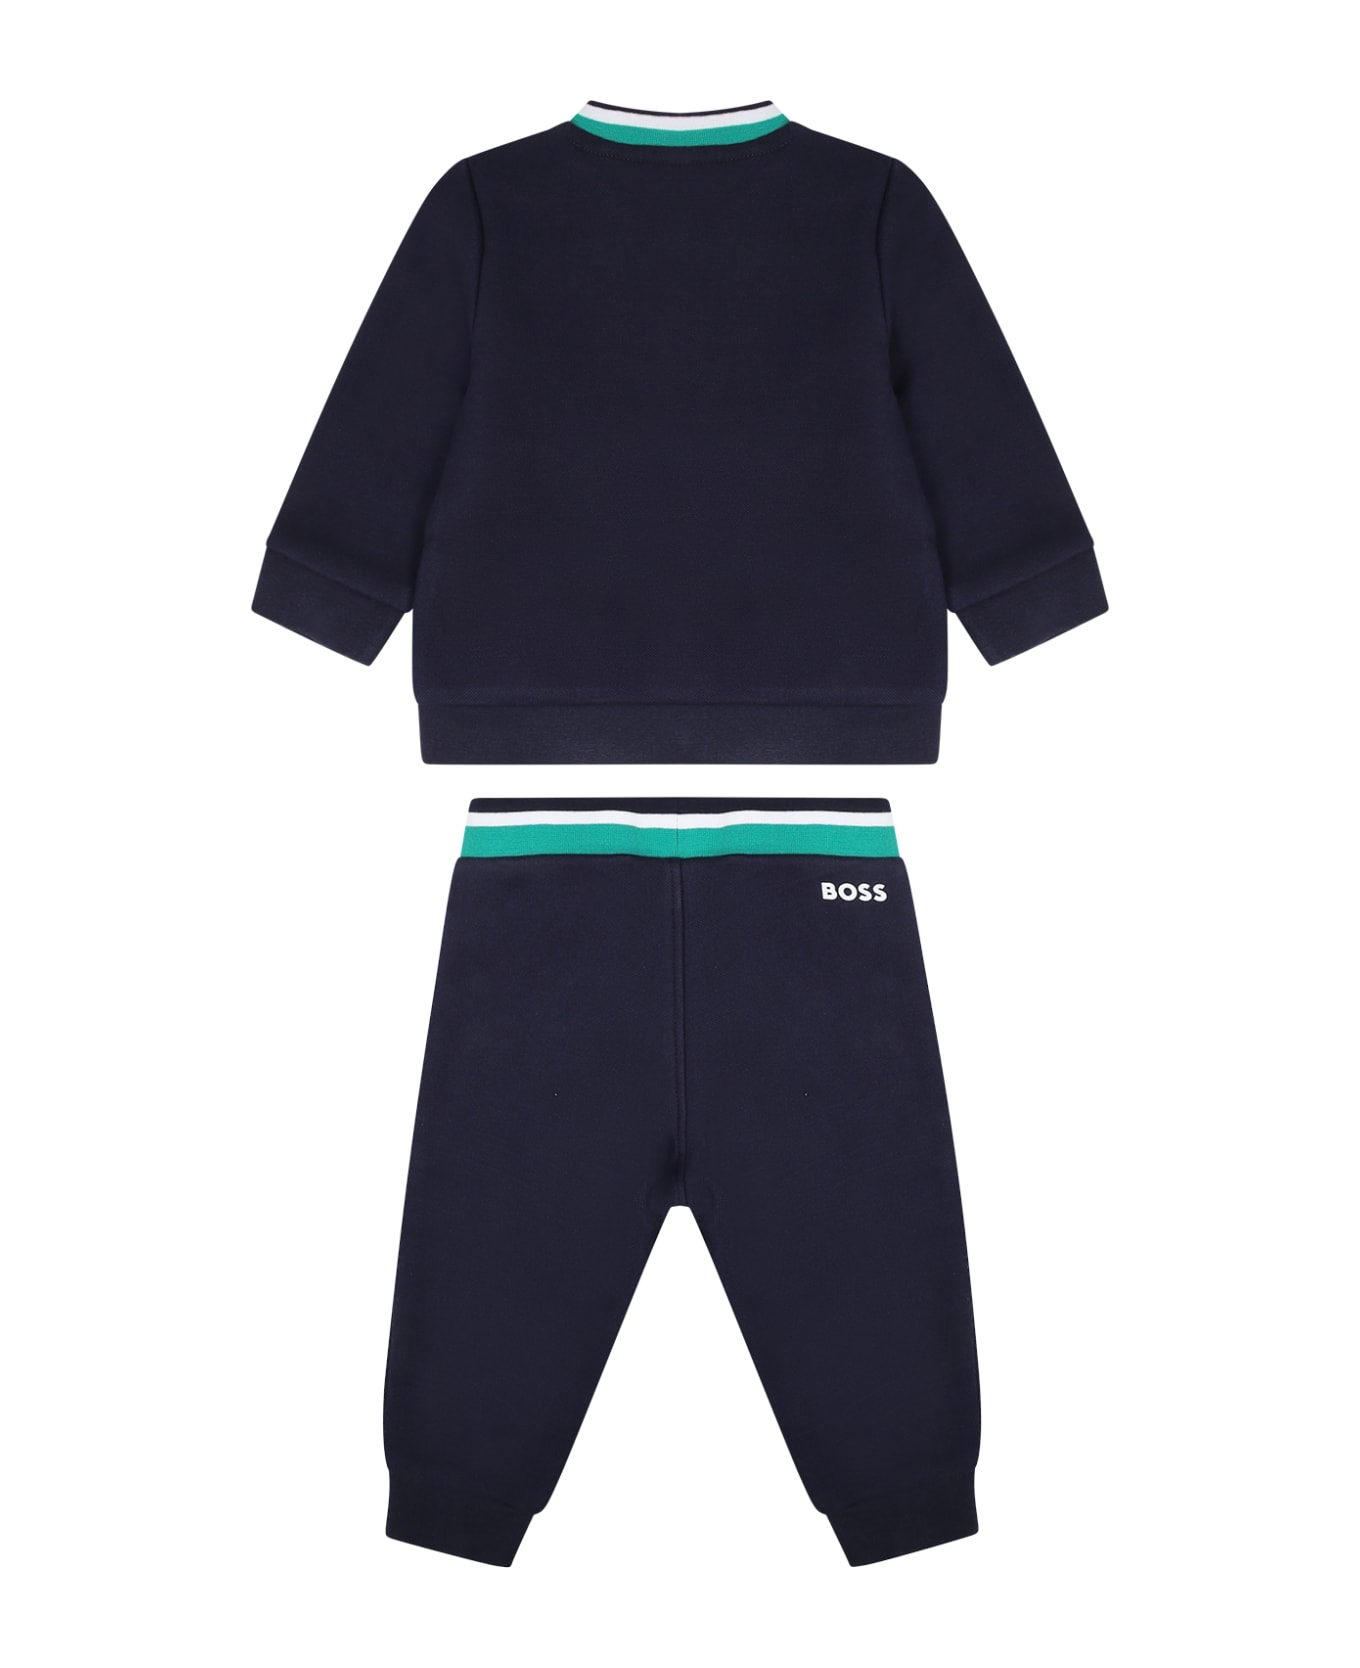 Hugo Boss Blue Sport Suit Set For Baby Boy - Blue